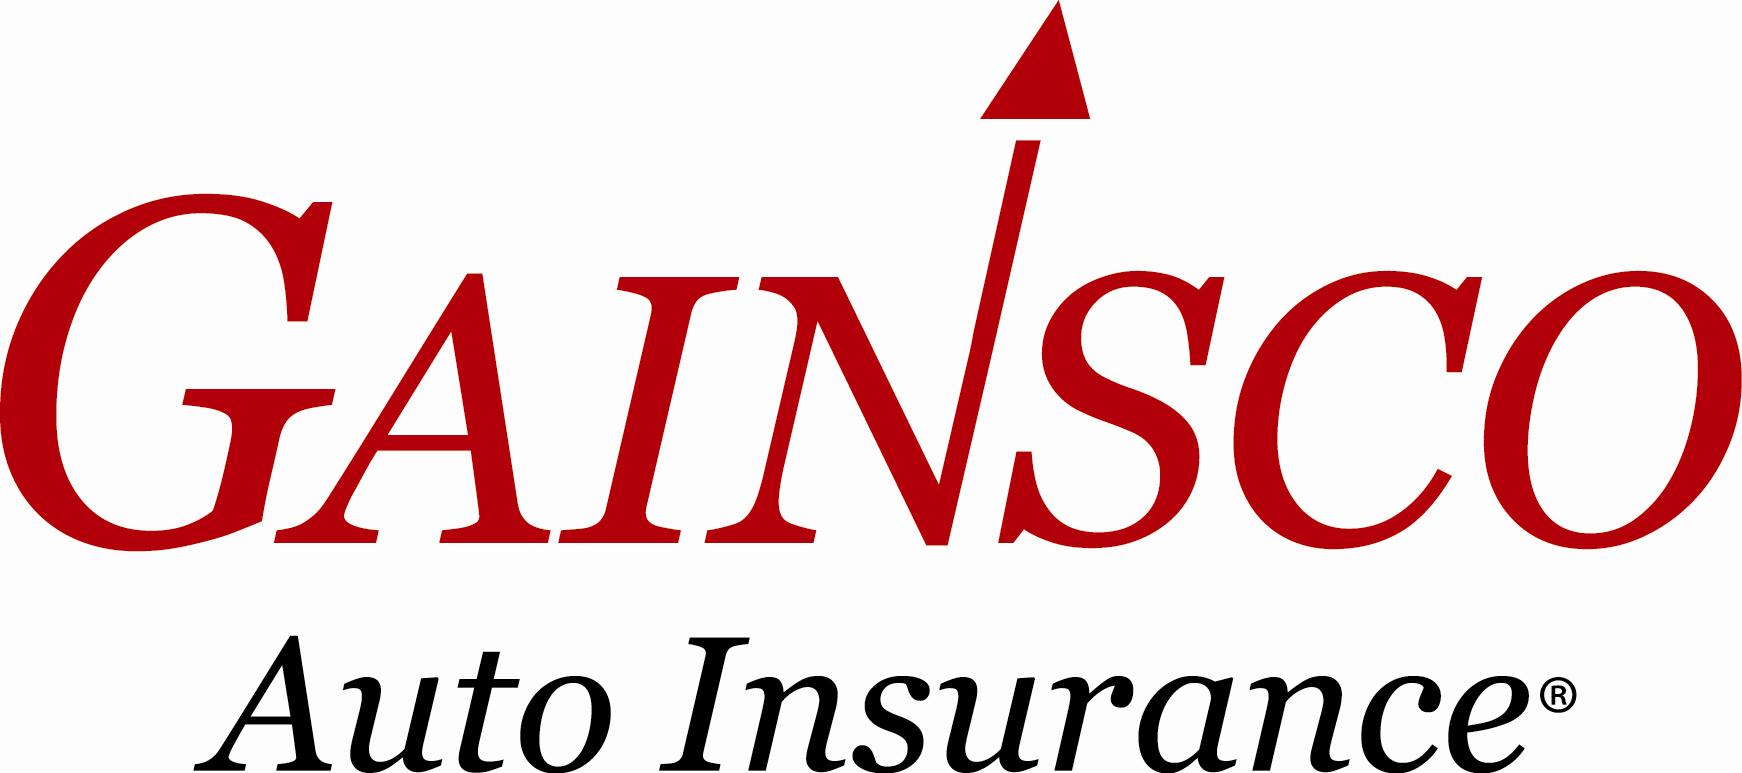 Gainsco Logo - Gainsco Auto Insurance Company - Florida Insurance Quotes